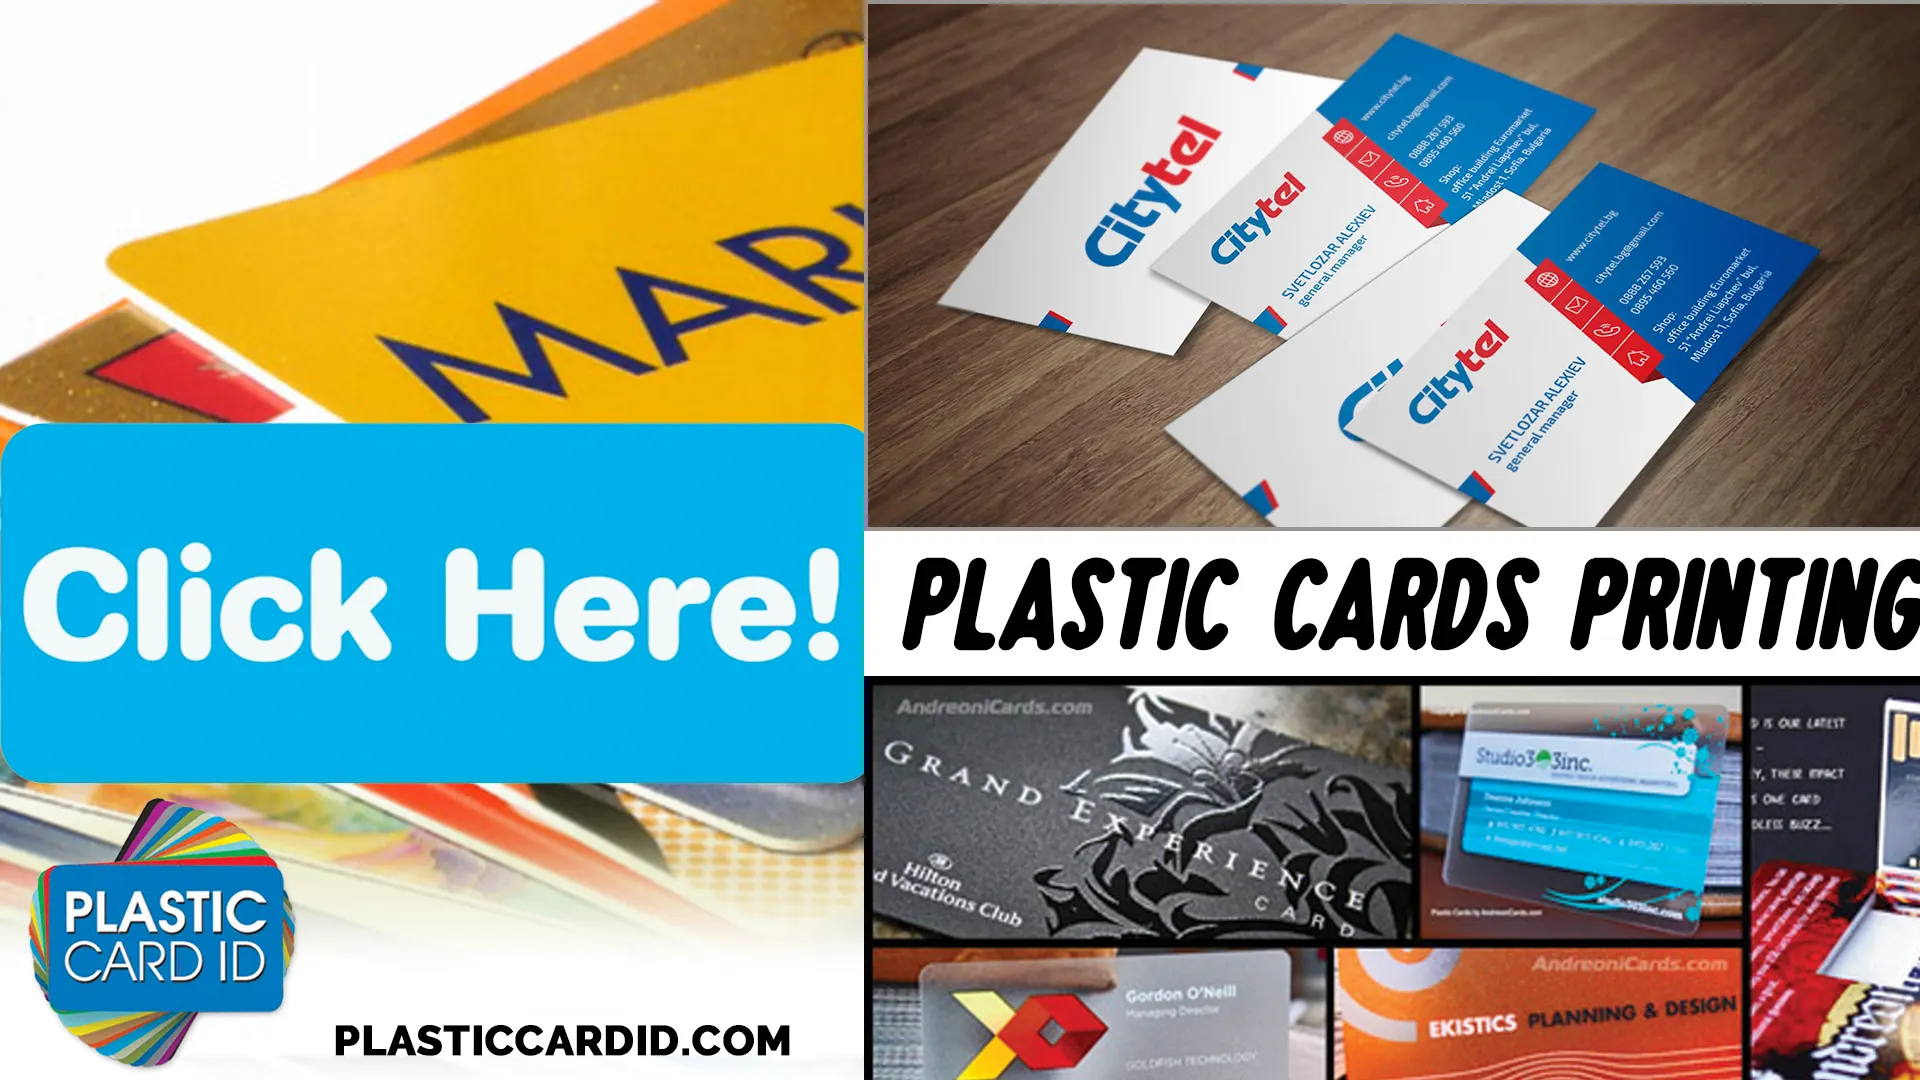 Tamper-Evident Features Plastic Cards